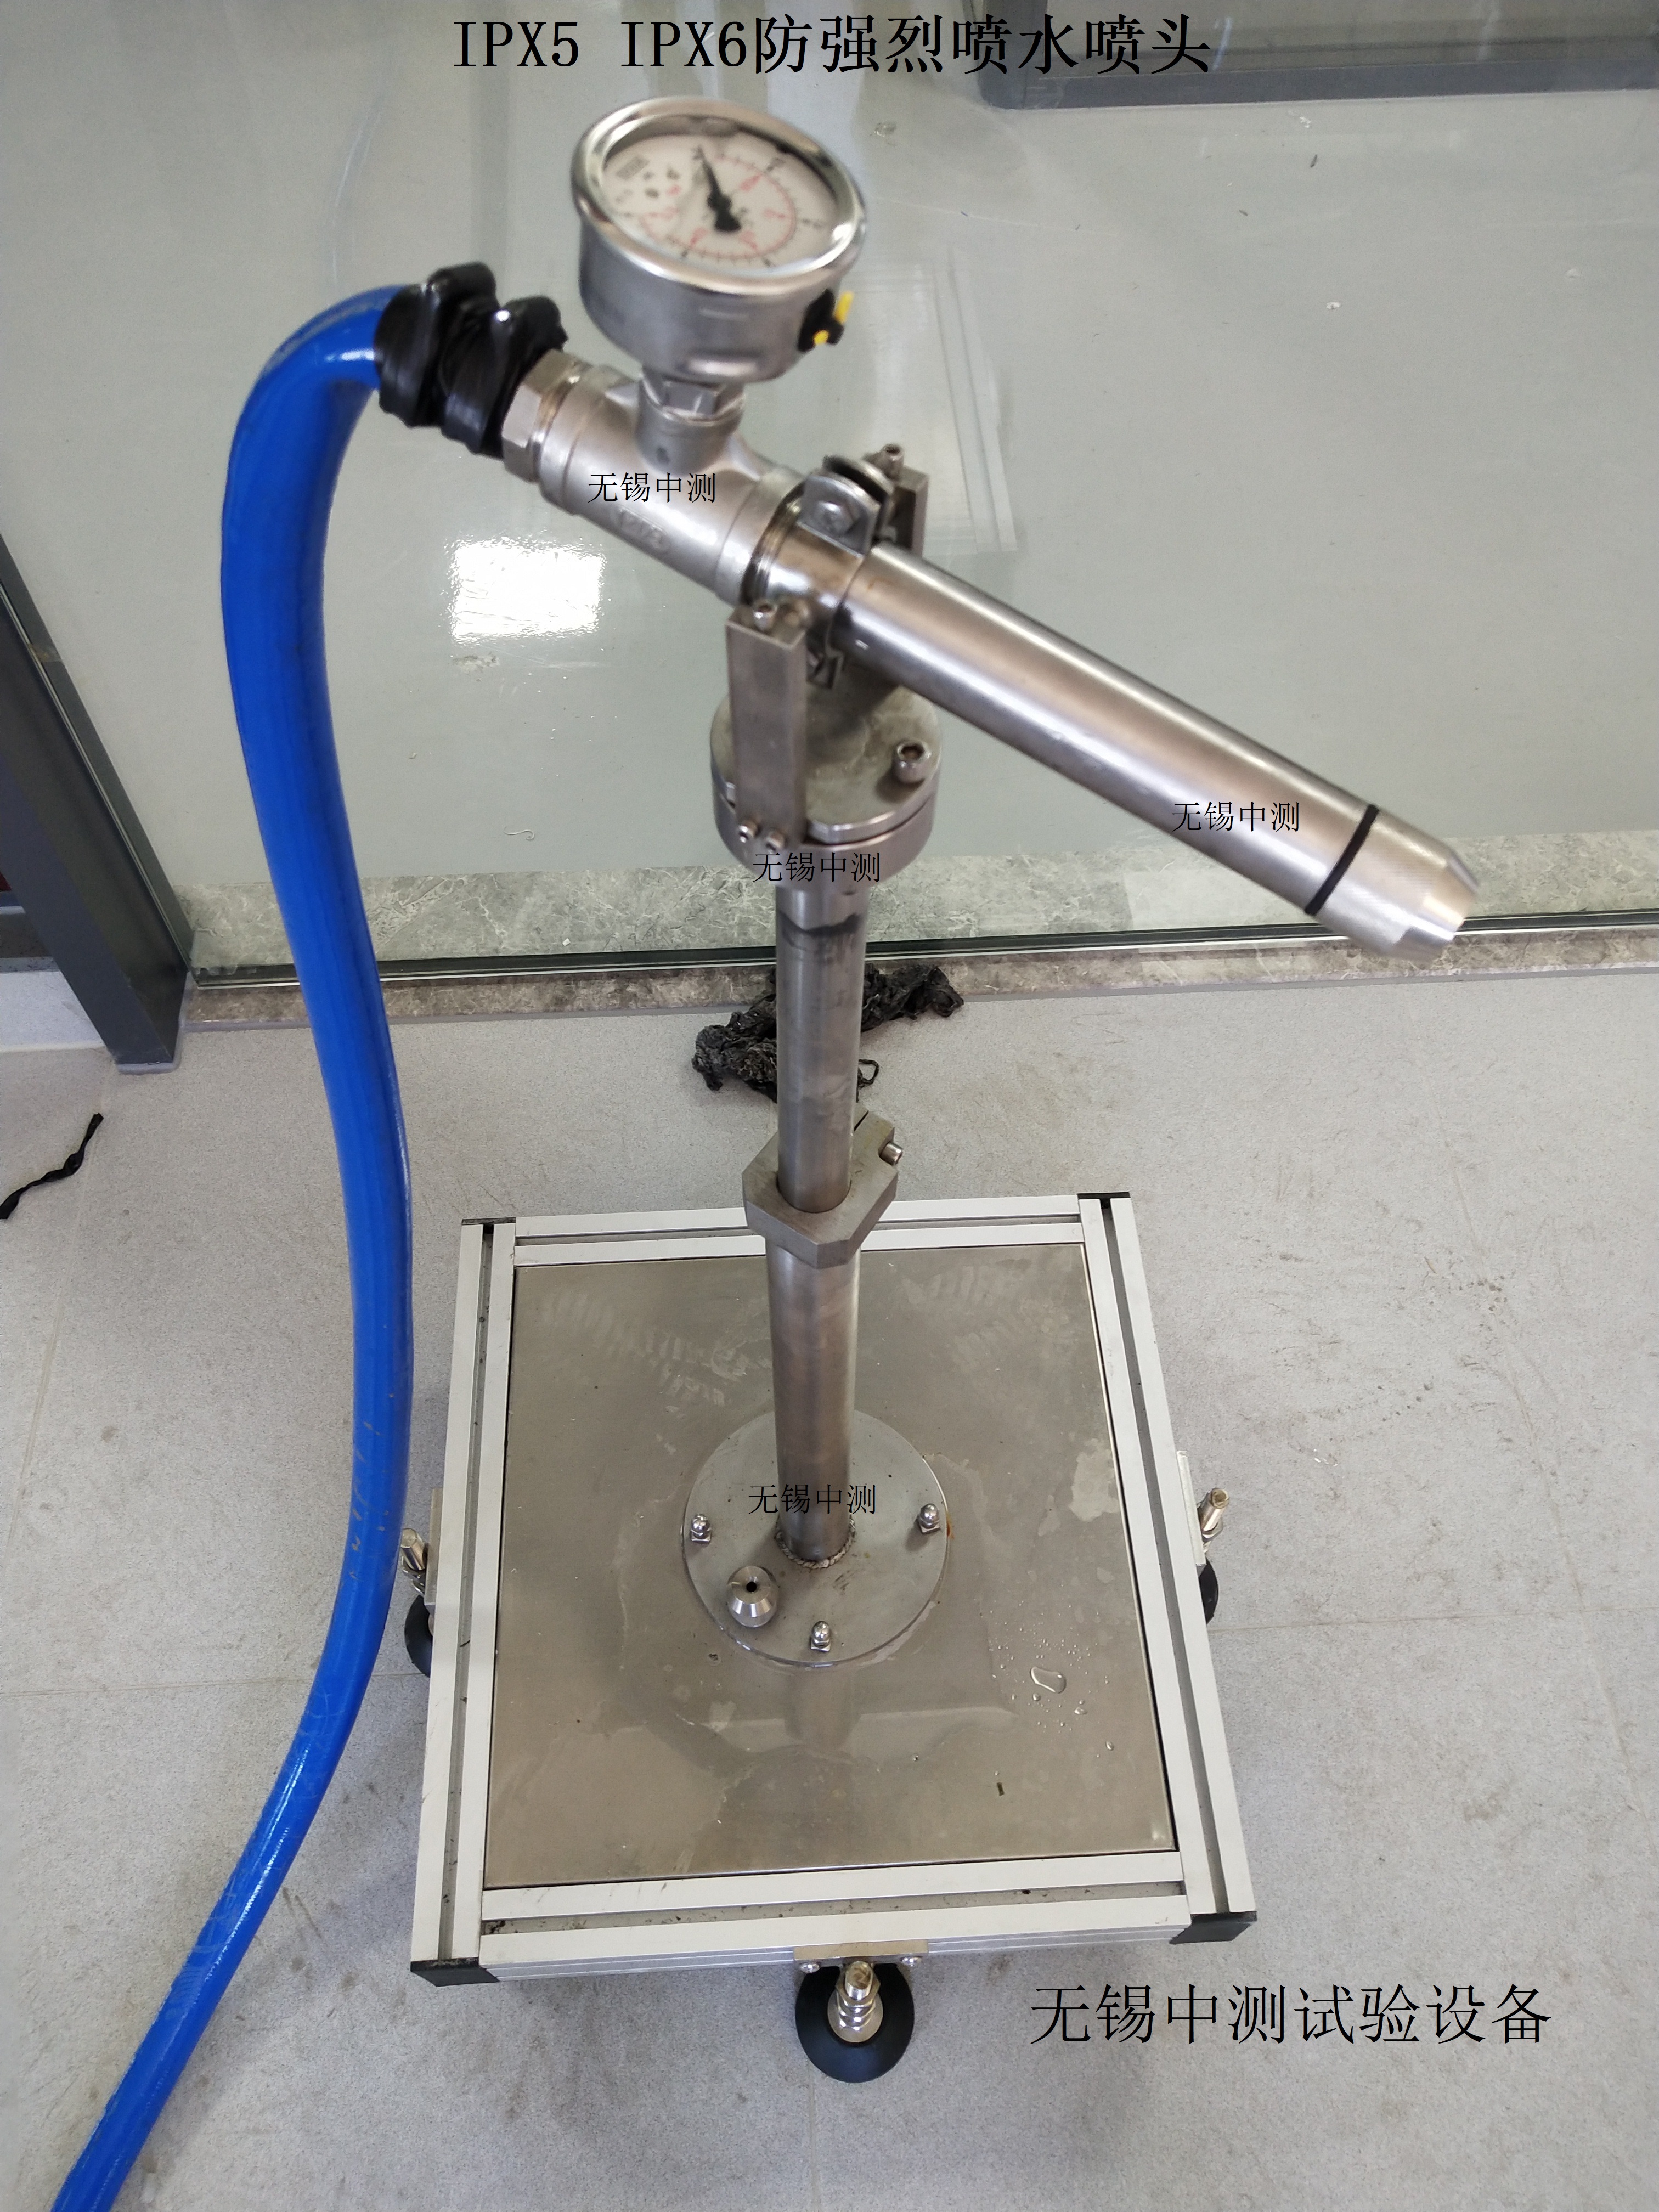 IP防水试验设备 中测IPX56喷水检测设备全自动IP防水试验机中高端品质